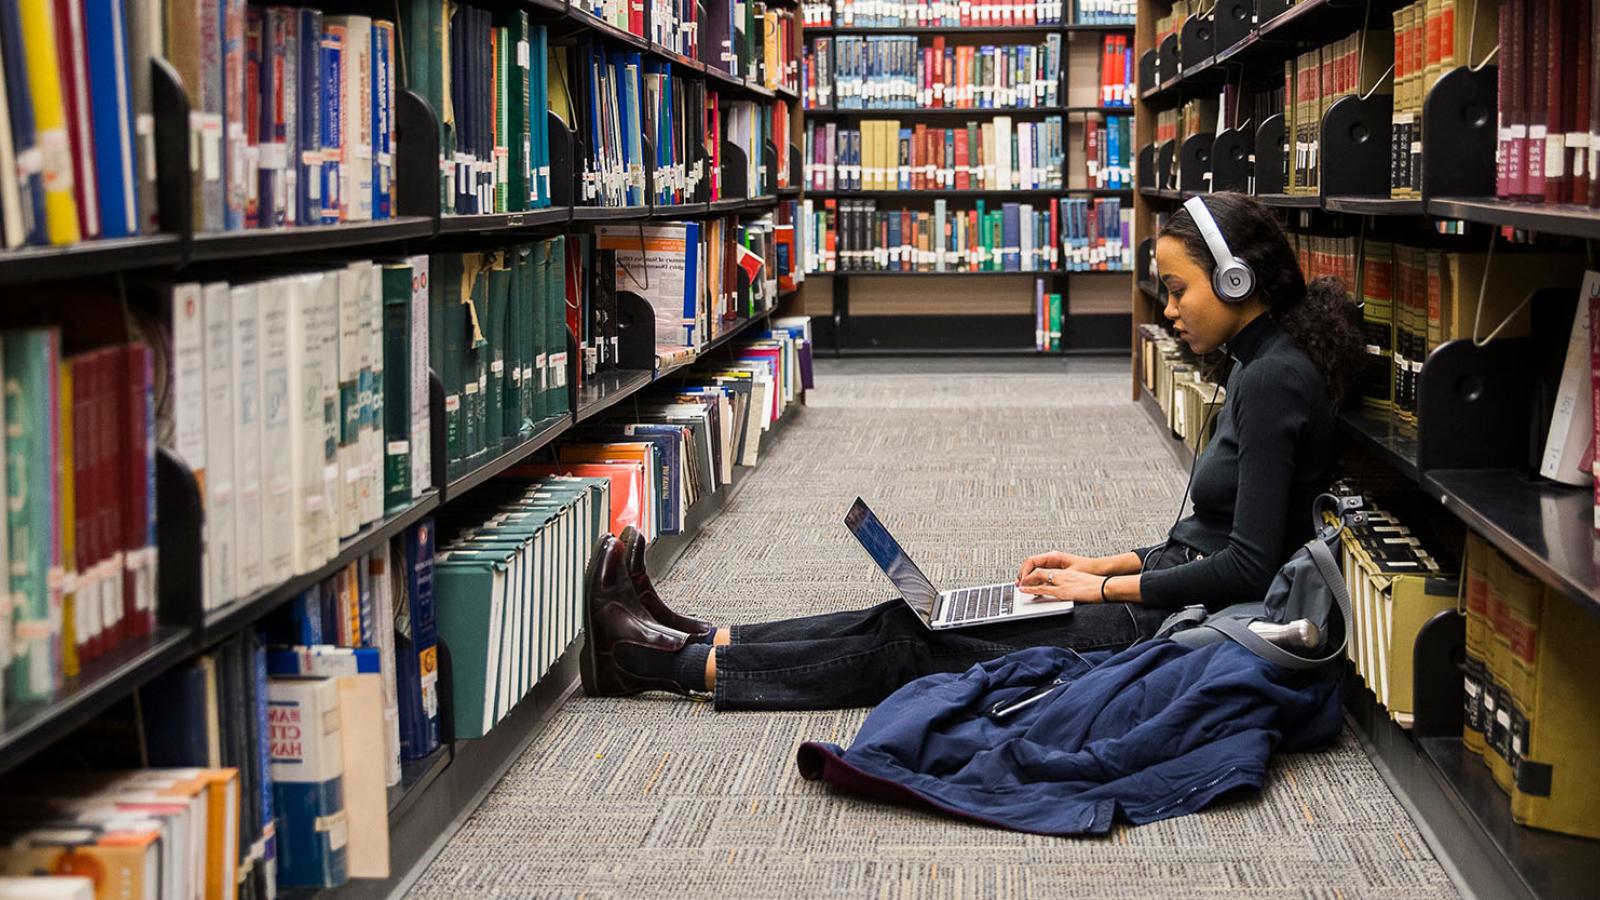 Student sitting between two library bookshelves on laptop wearing headphones